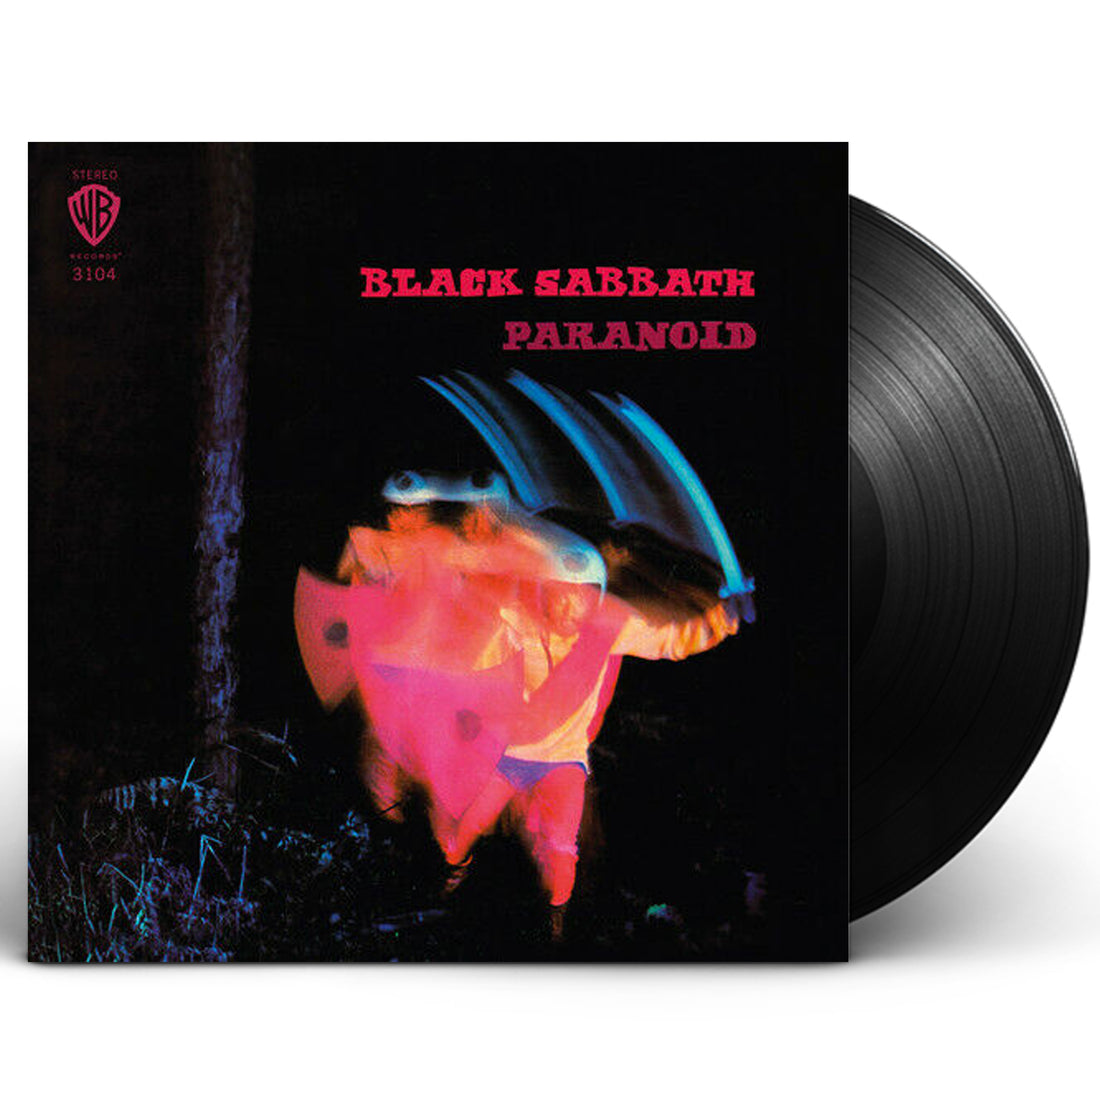 Black Sabbath "Paranoid" 180g LP Vinyl